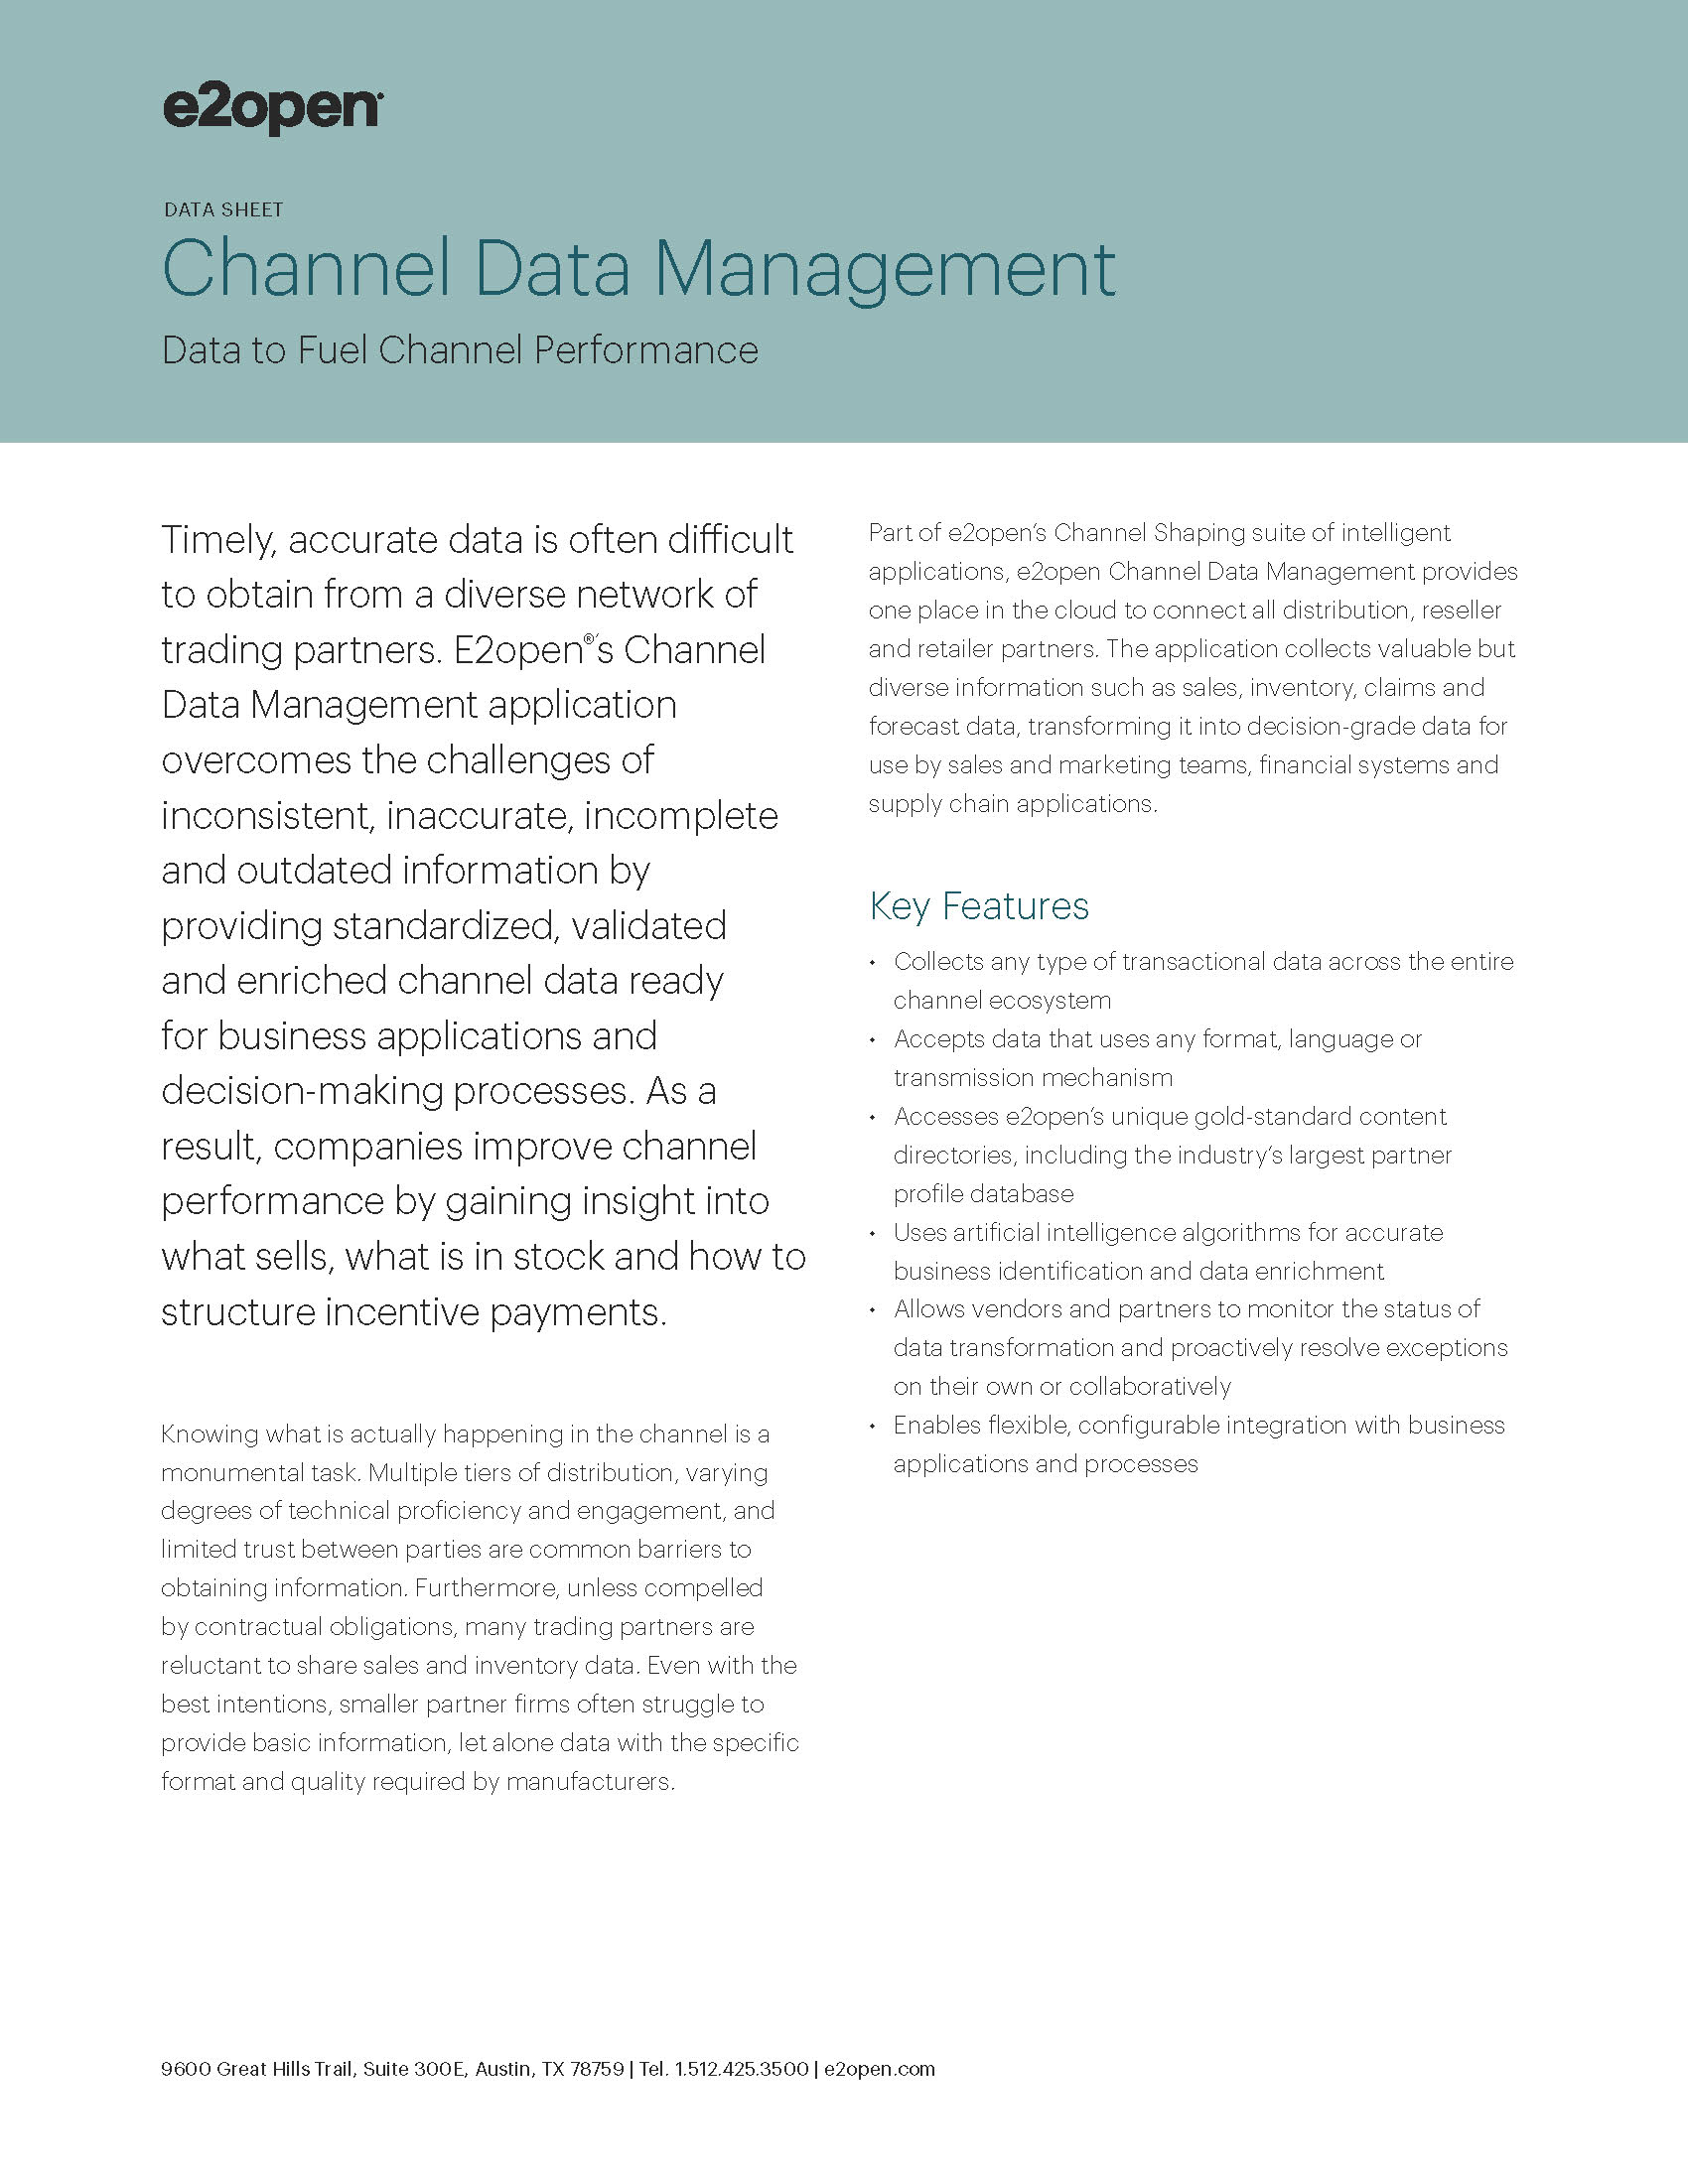 E2open Channel Data Management